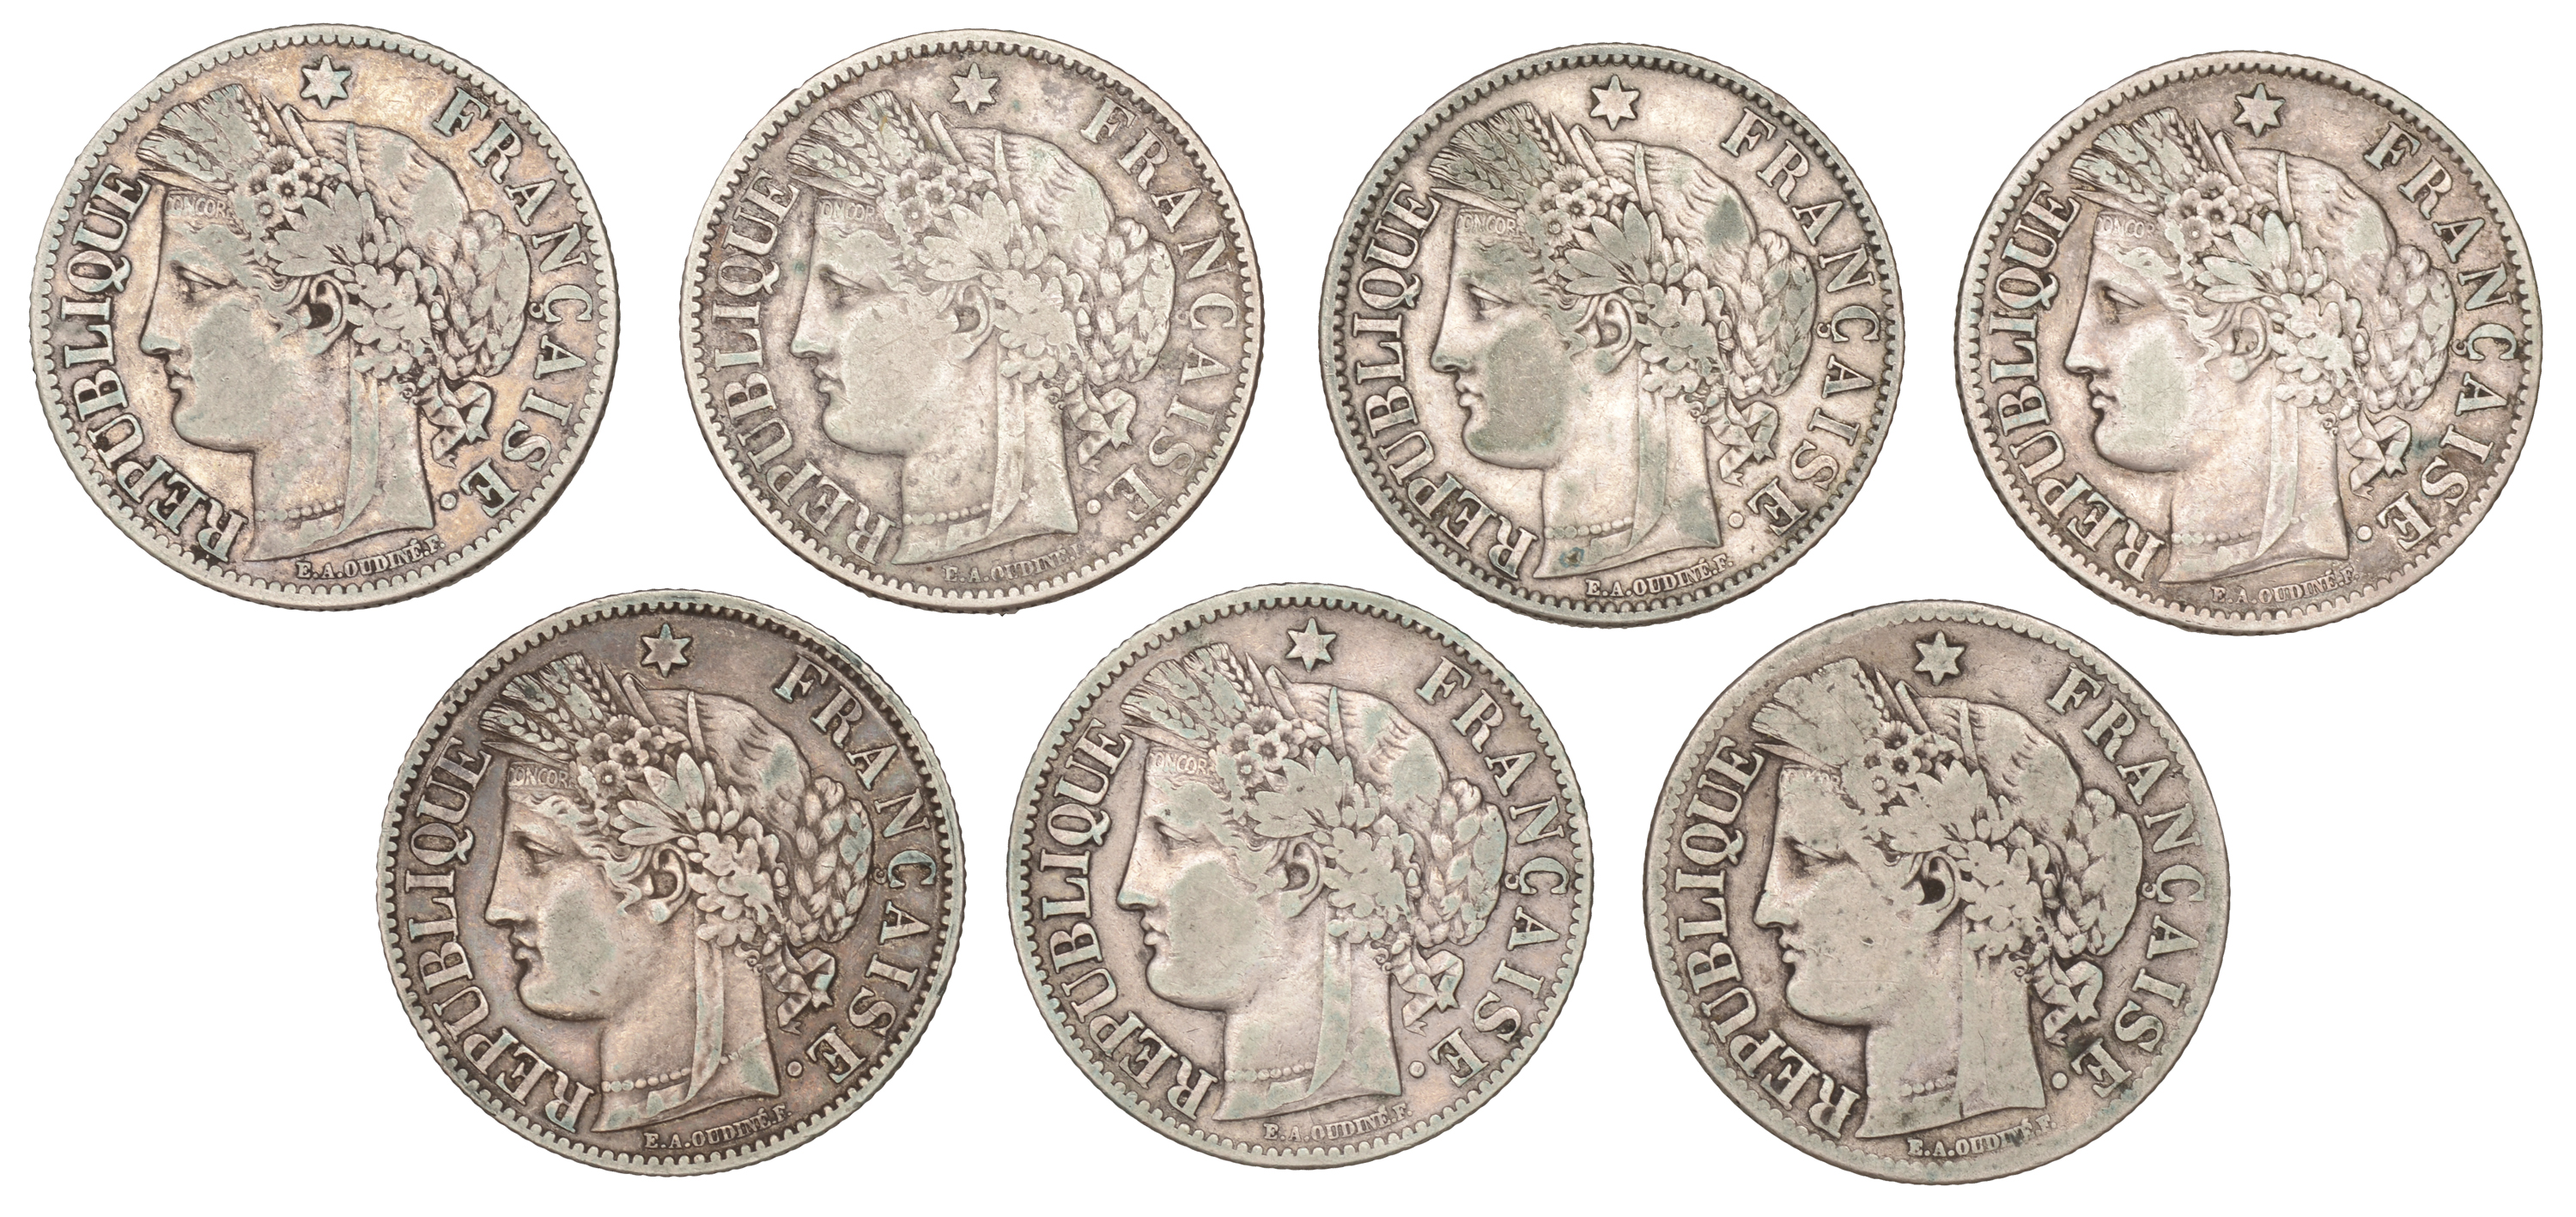 France, Third Republic (1871-1940), 2 Francs (7), 1872k, 1873a, 1881a, 1887a, 1894a, 1895a (...